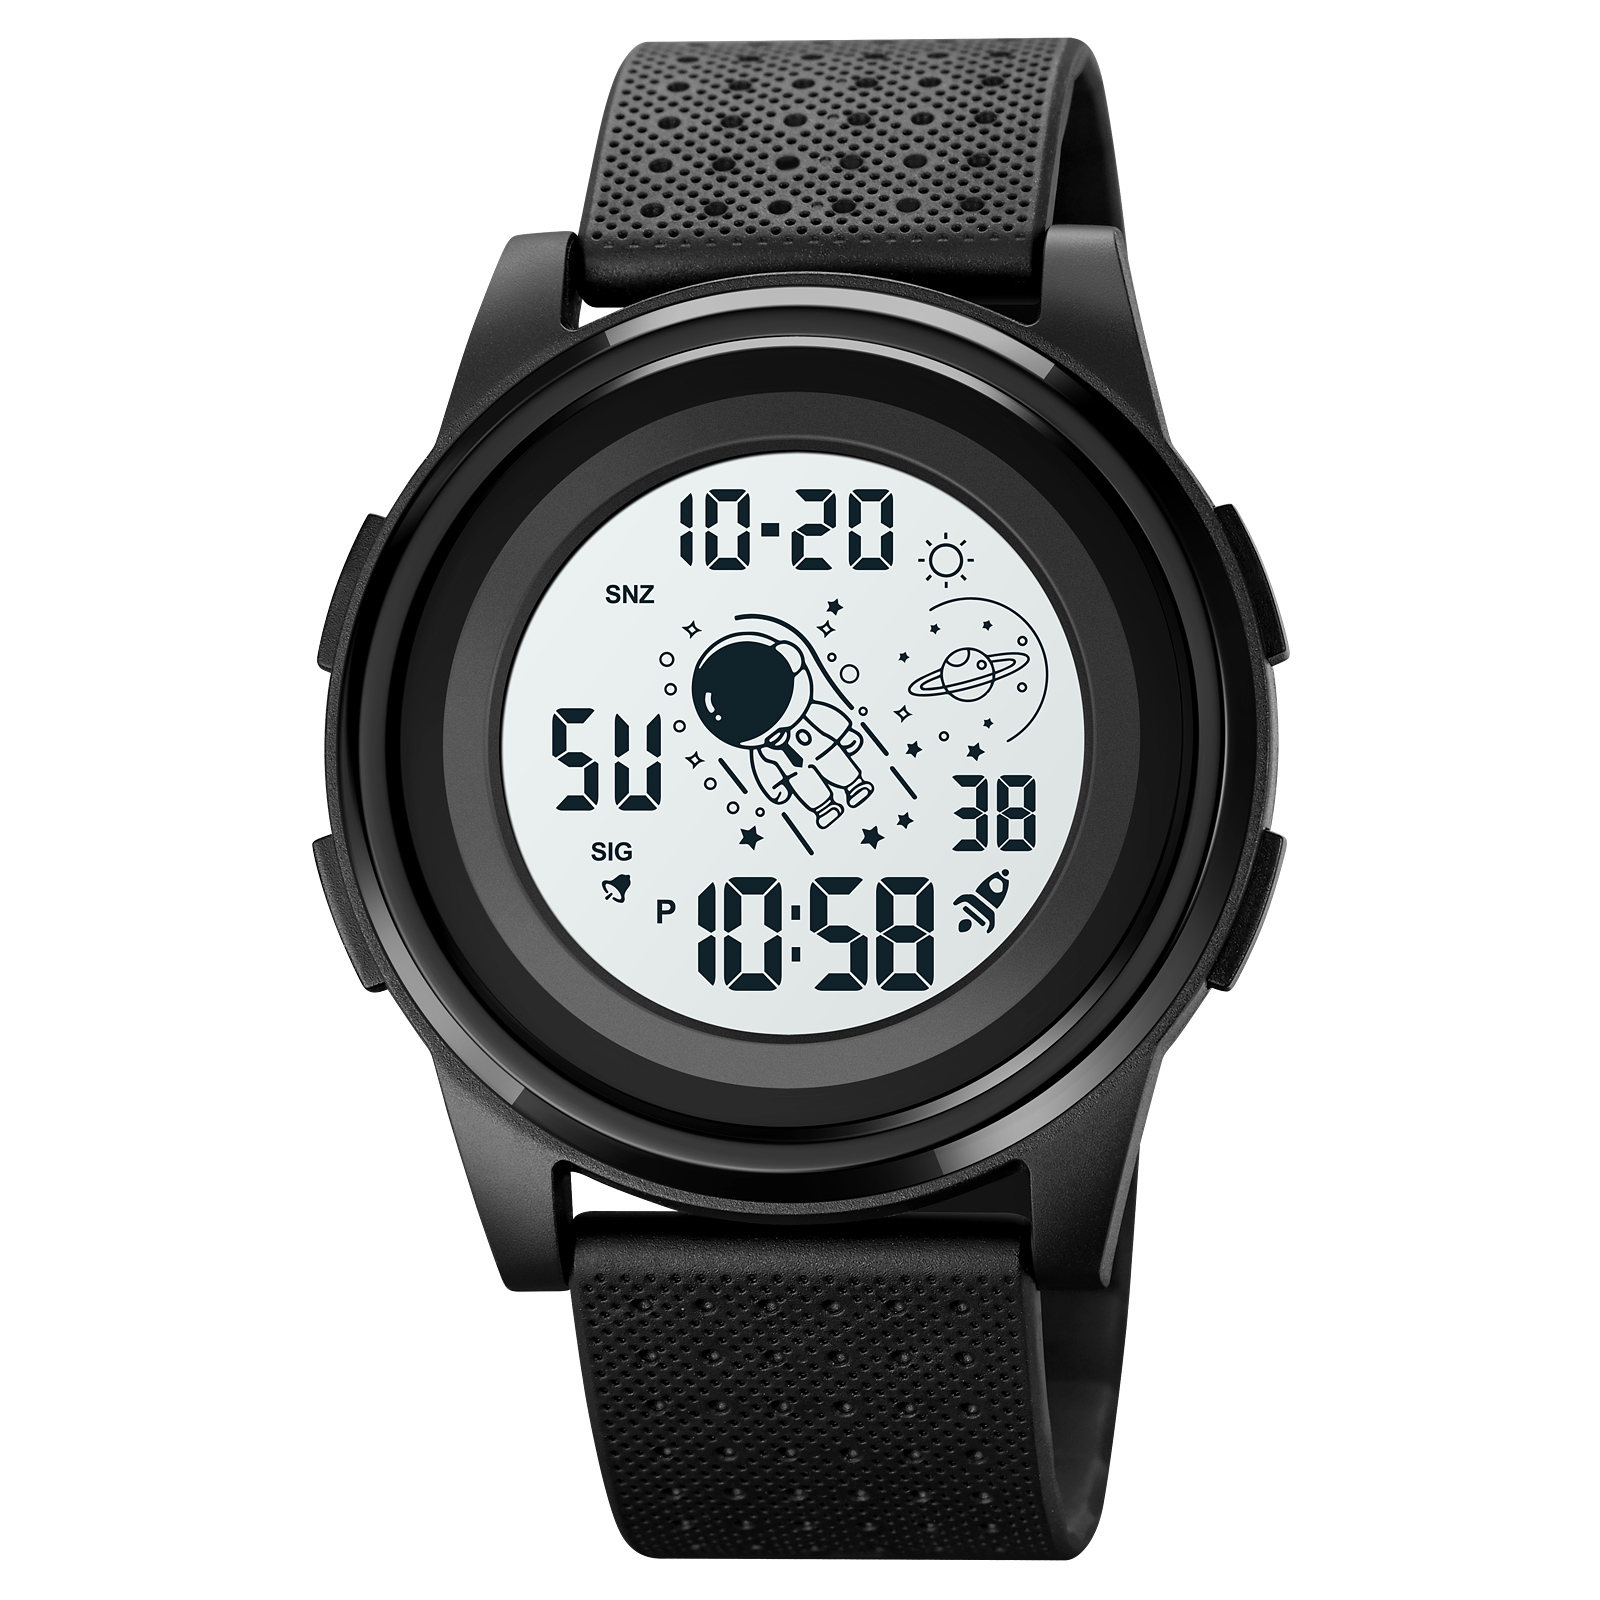 Professional Digital Watch Wholesaler-Skmei Watch Manufacture Co.,Ltd